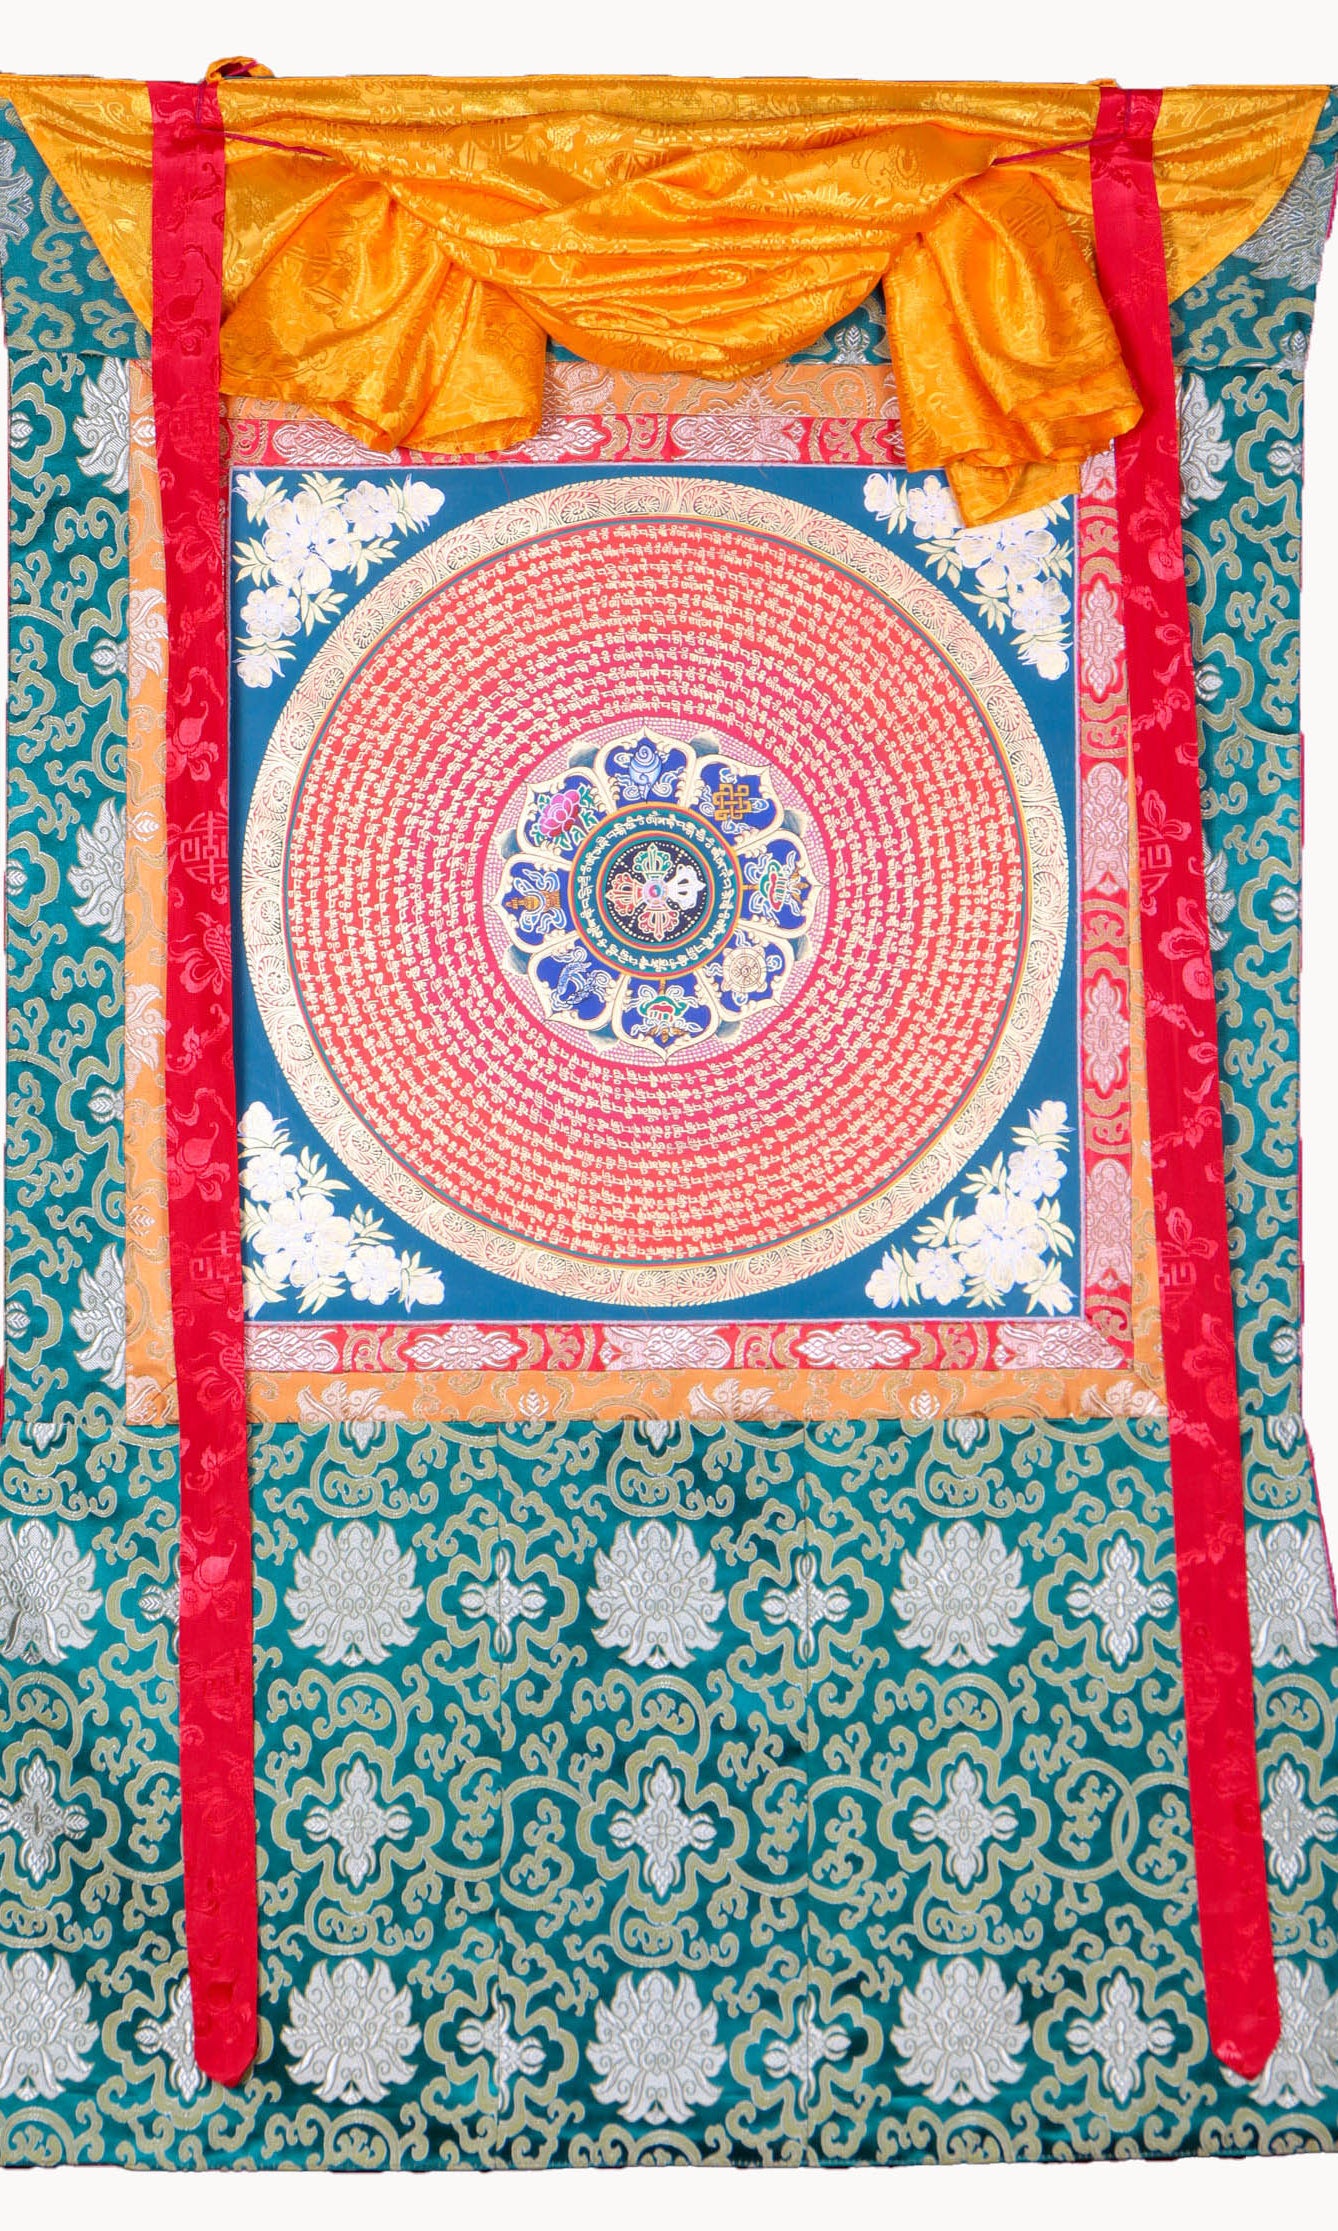 Mantra Mandala Brocade Thangka for wall decor.